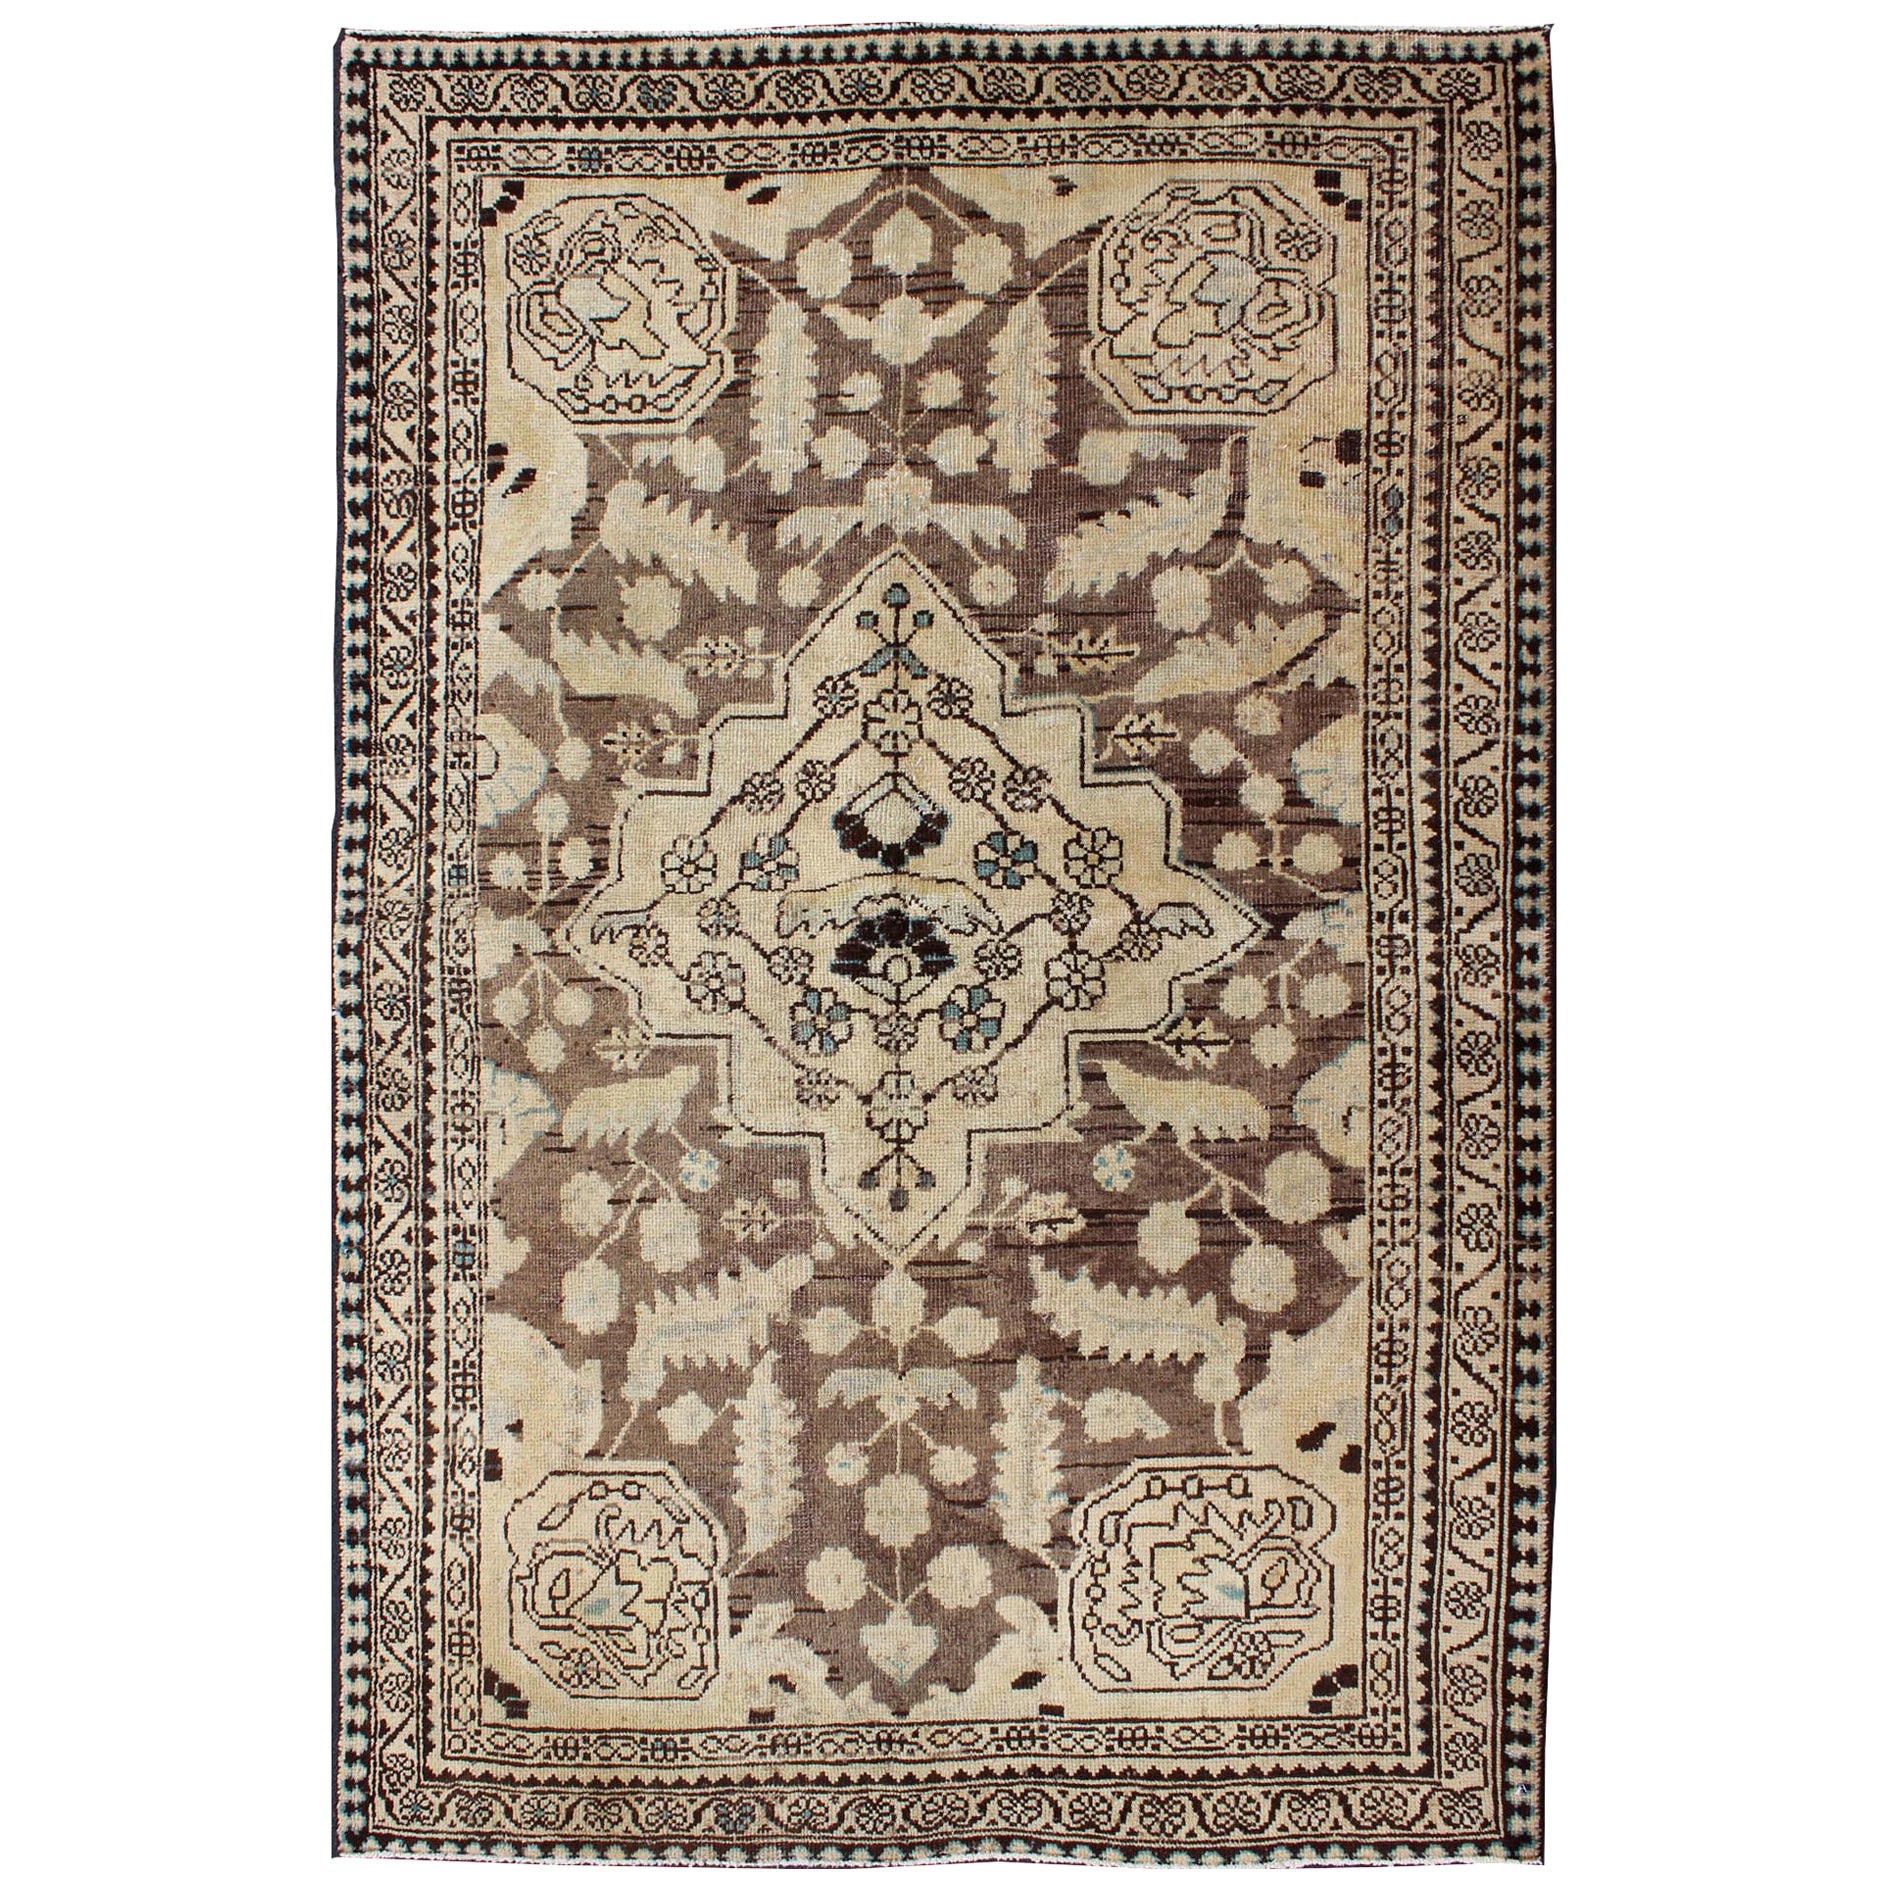 Semi Antique Persian Lilihan Rug in Brown and Earth Colors